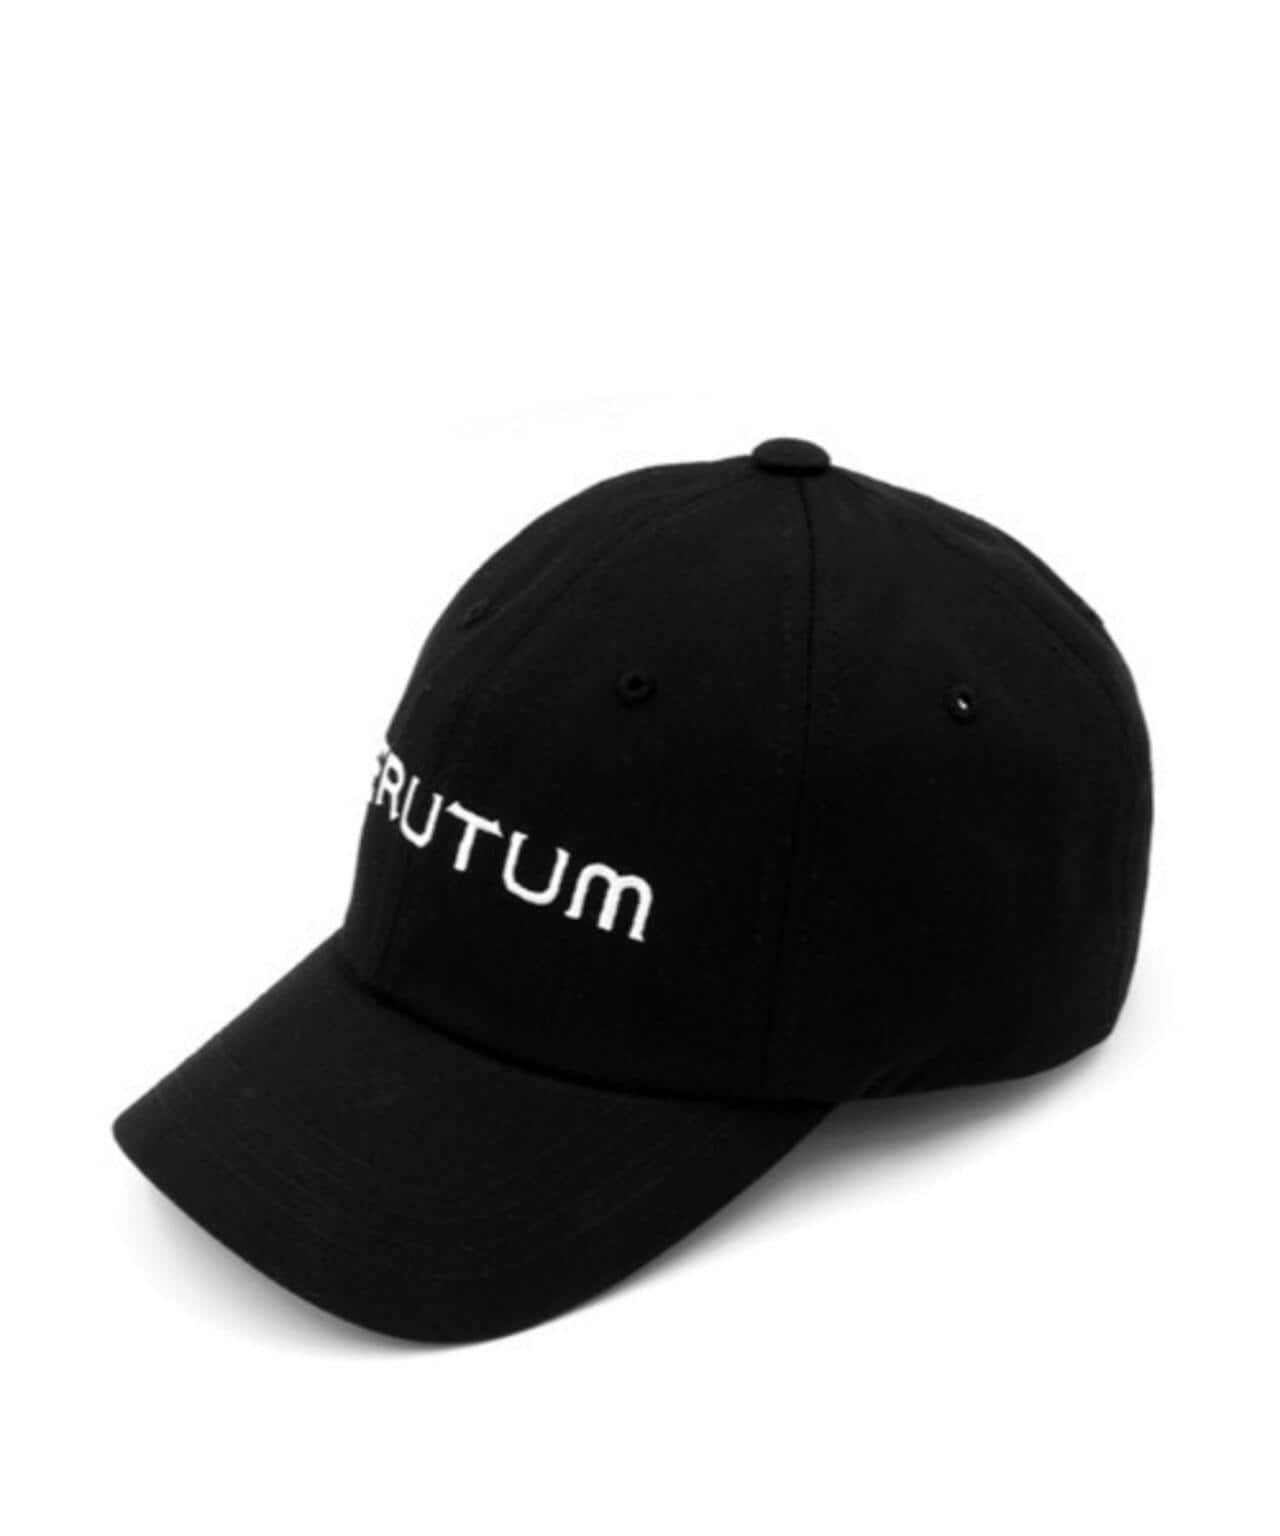 VERUTUM/ヴェルタム/Front Logo